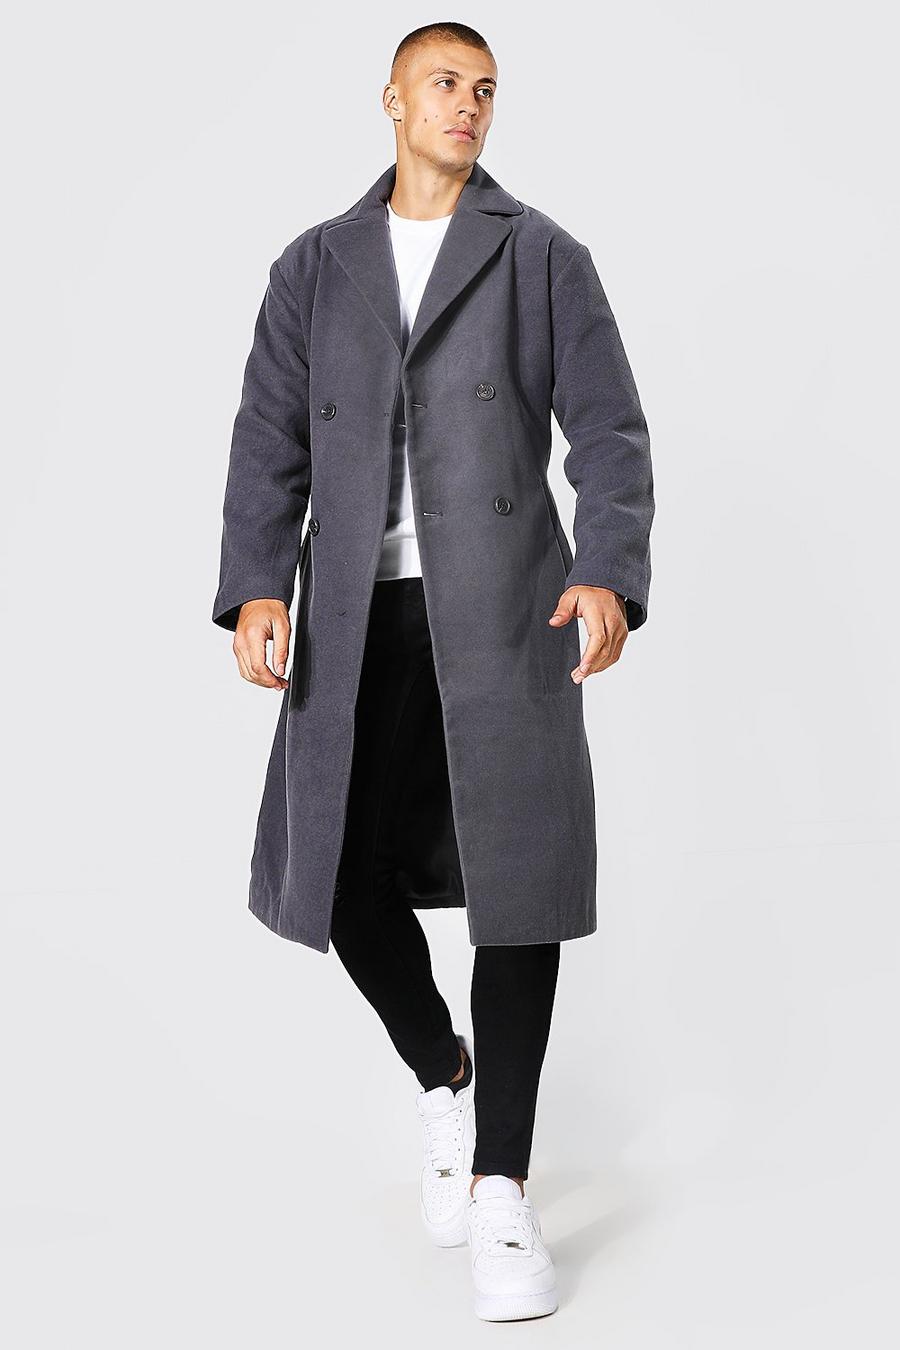 Charcoal Gewatteerde Overcoat Met Dubbele Knopen, Rugpaneel En Stiksels image number 1